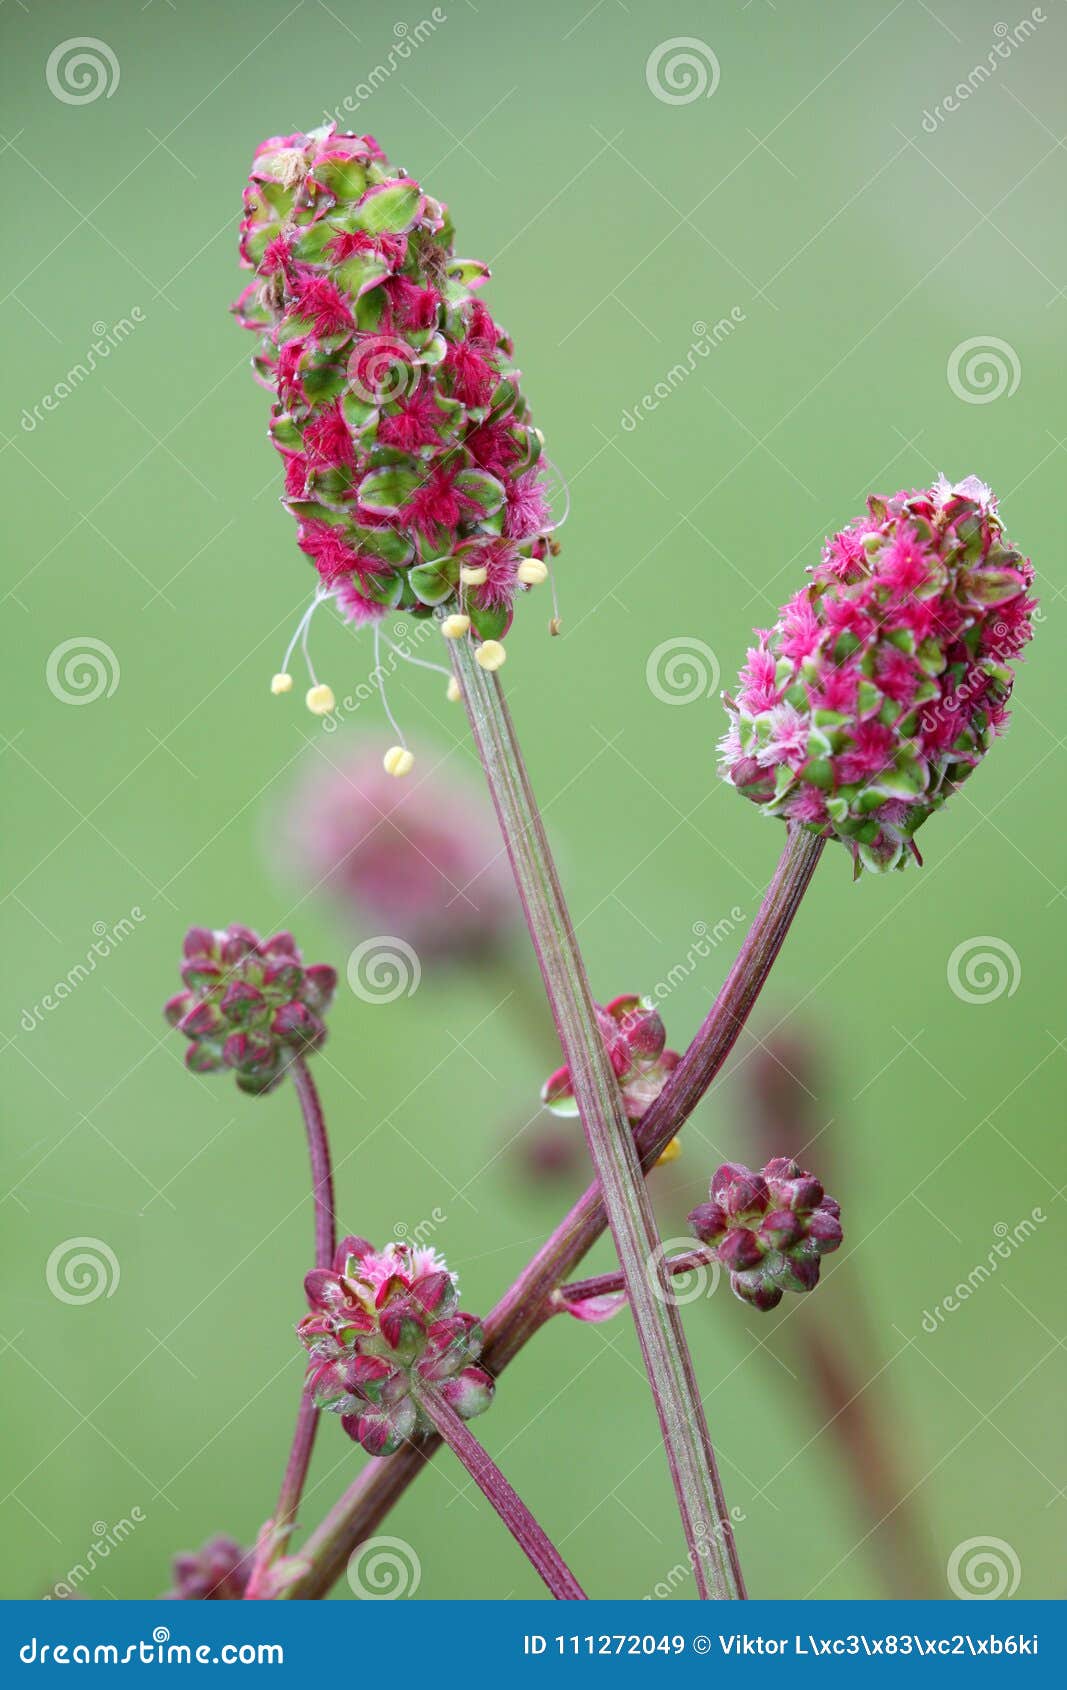 sanguisorba minor, the salad burnet, garden burnet, small burnet, burnet, is a plant in the family rosaceae that is